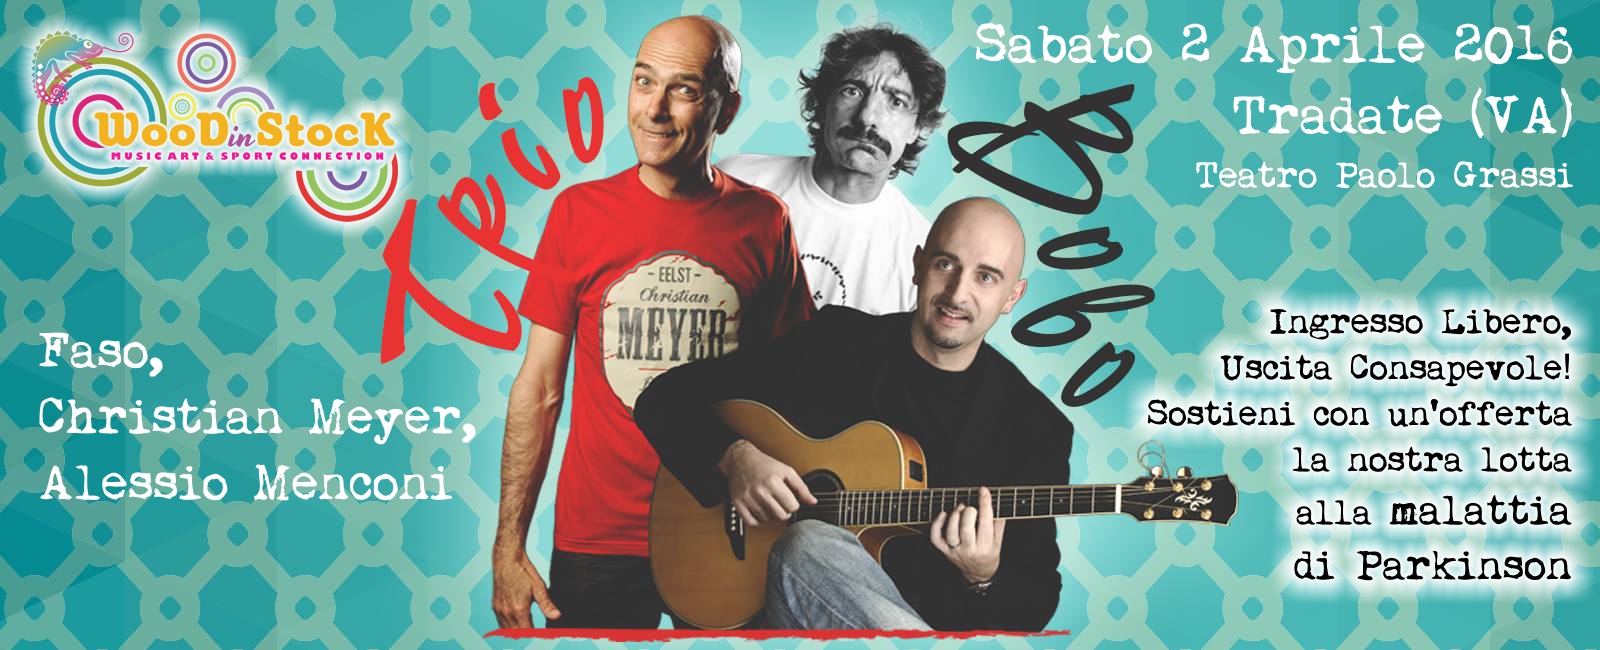 Trio Bobo